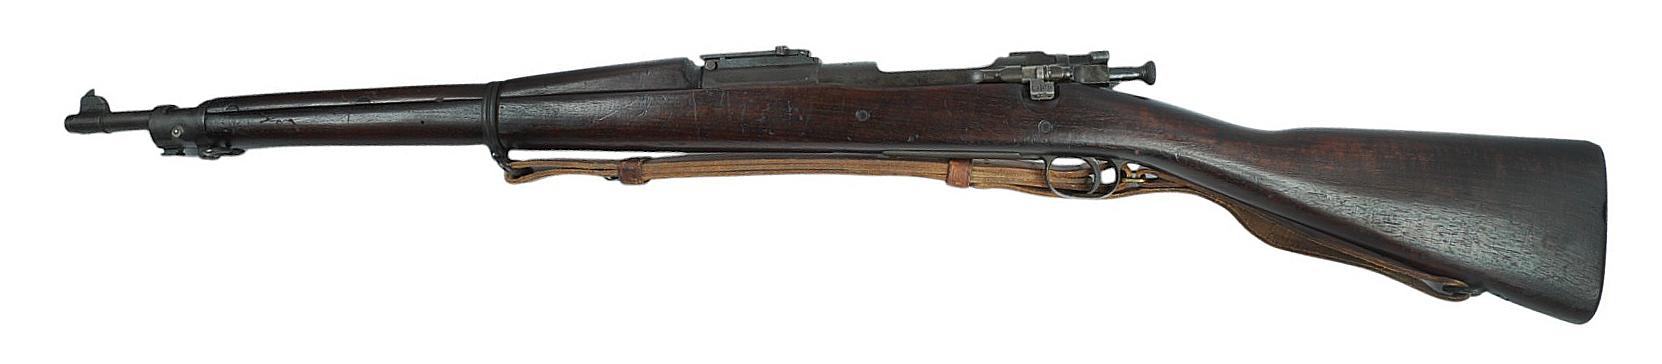 US Military WWI-II ERA M1903 30-06 Rock Island Bolt-Action Rifle - FFL #36239 (EHF1)